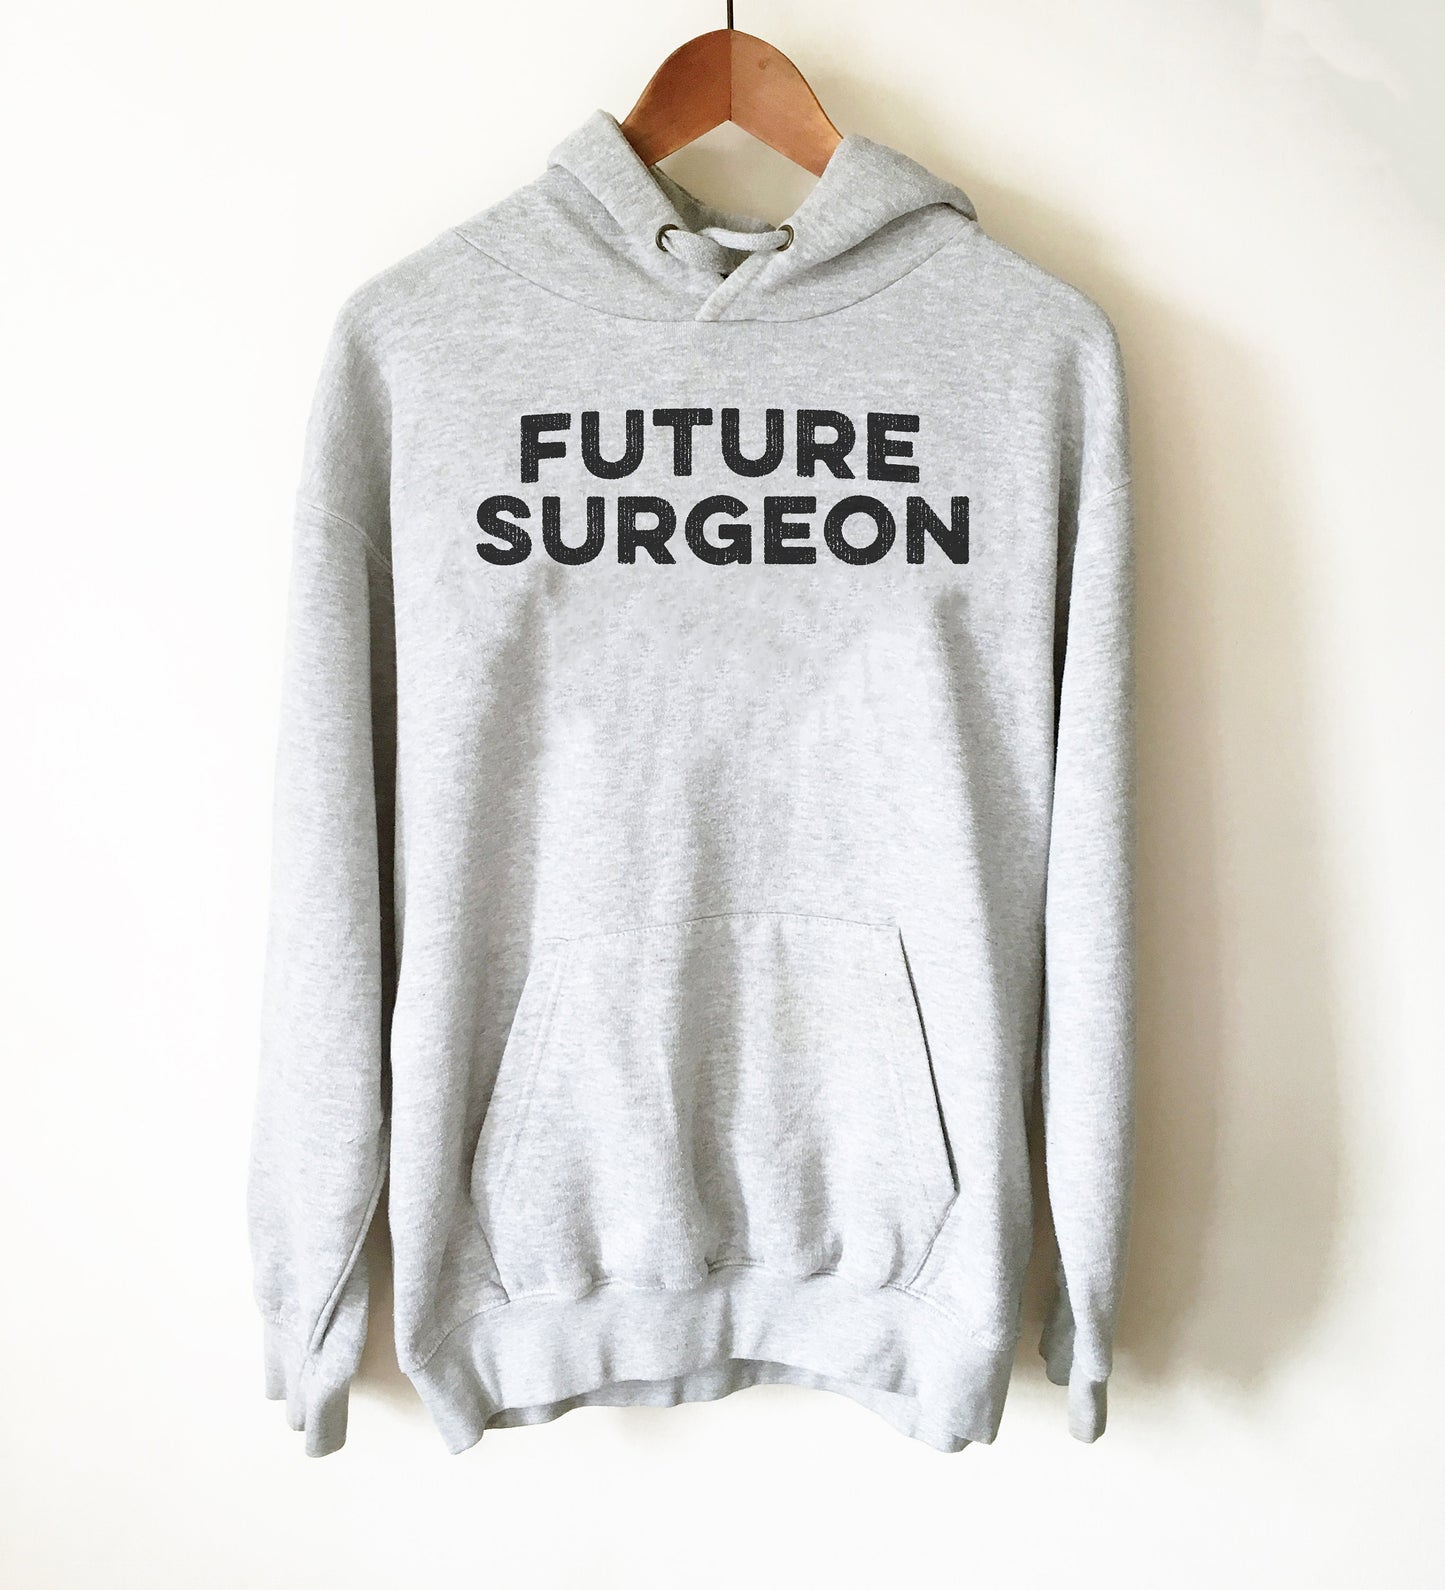 Future Surgeon Hoodie - Surgeon Shirt, Surgeon Gift, Trauma Surgeon, Brain Surgeon Shirt, Medical School, Doctor Shirt